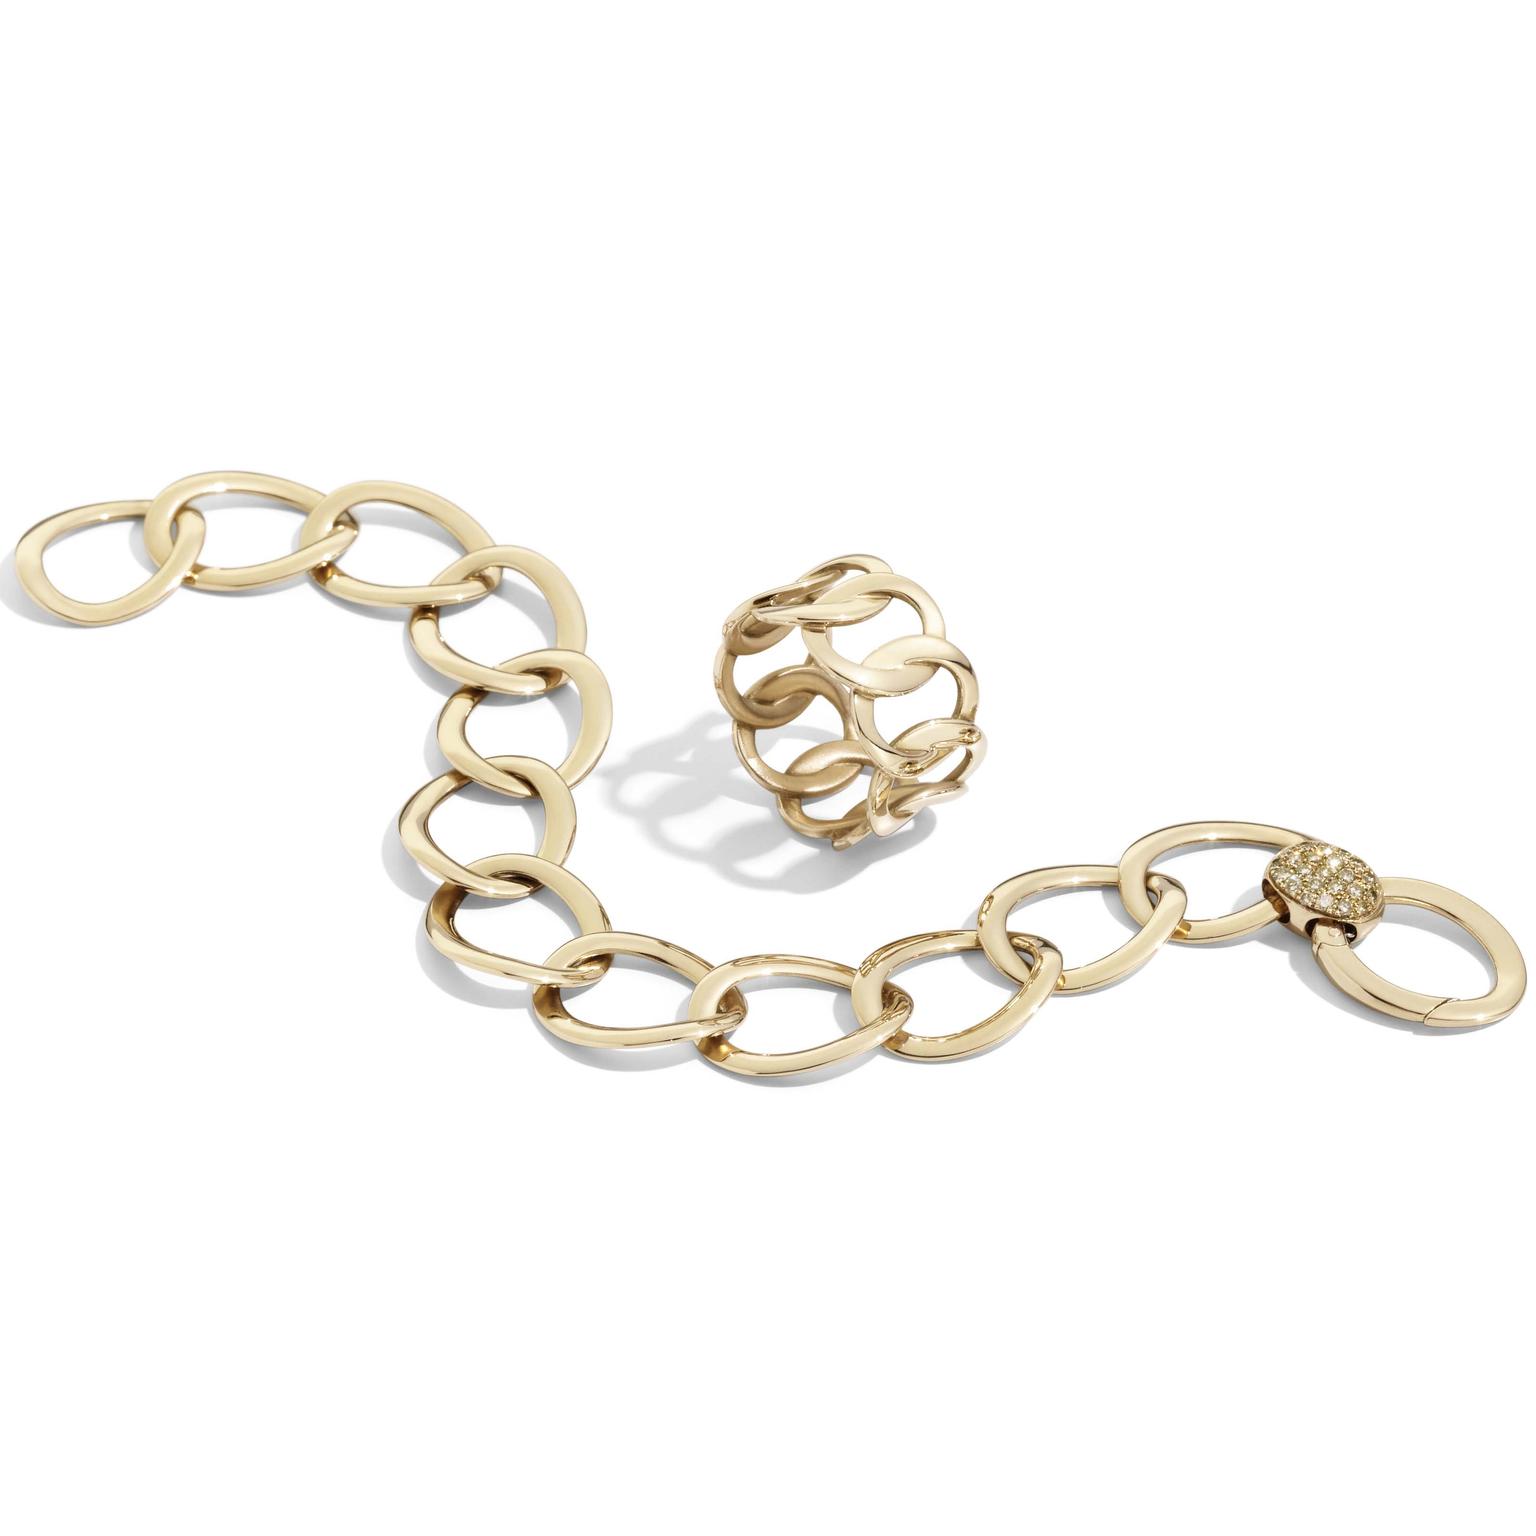 Pomellato Brera rose gold ring and bracelet